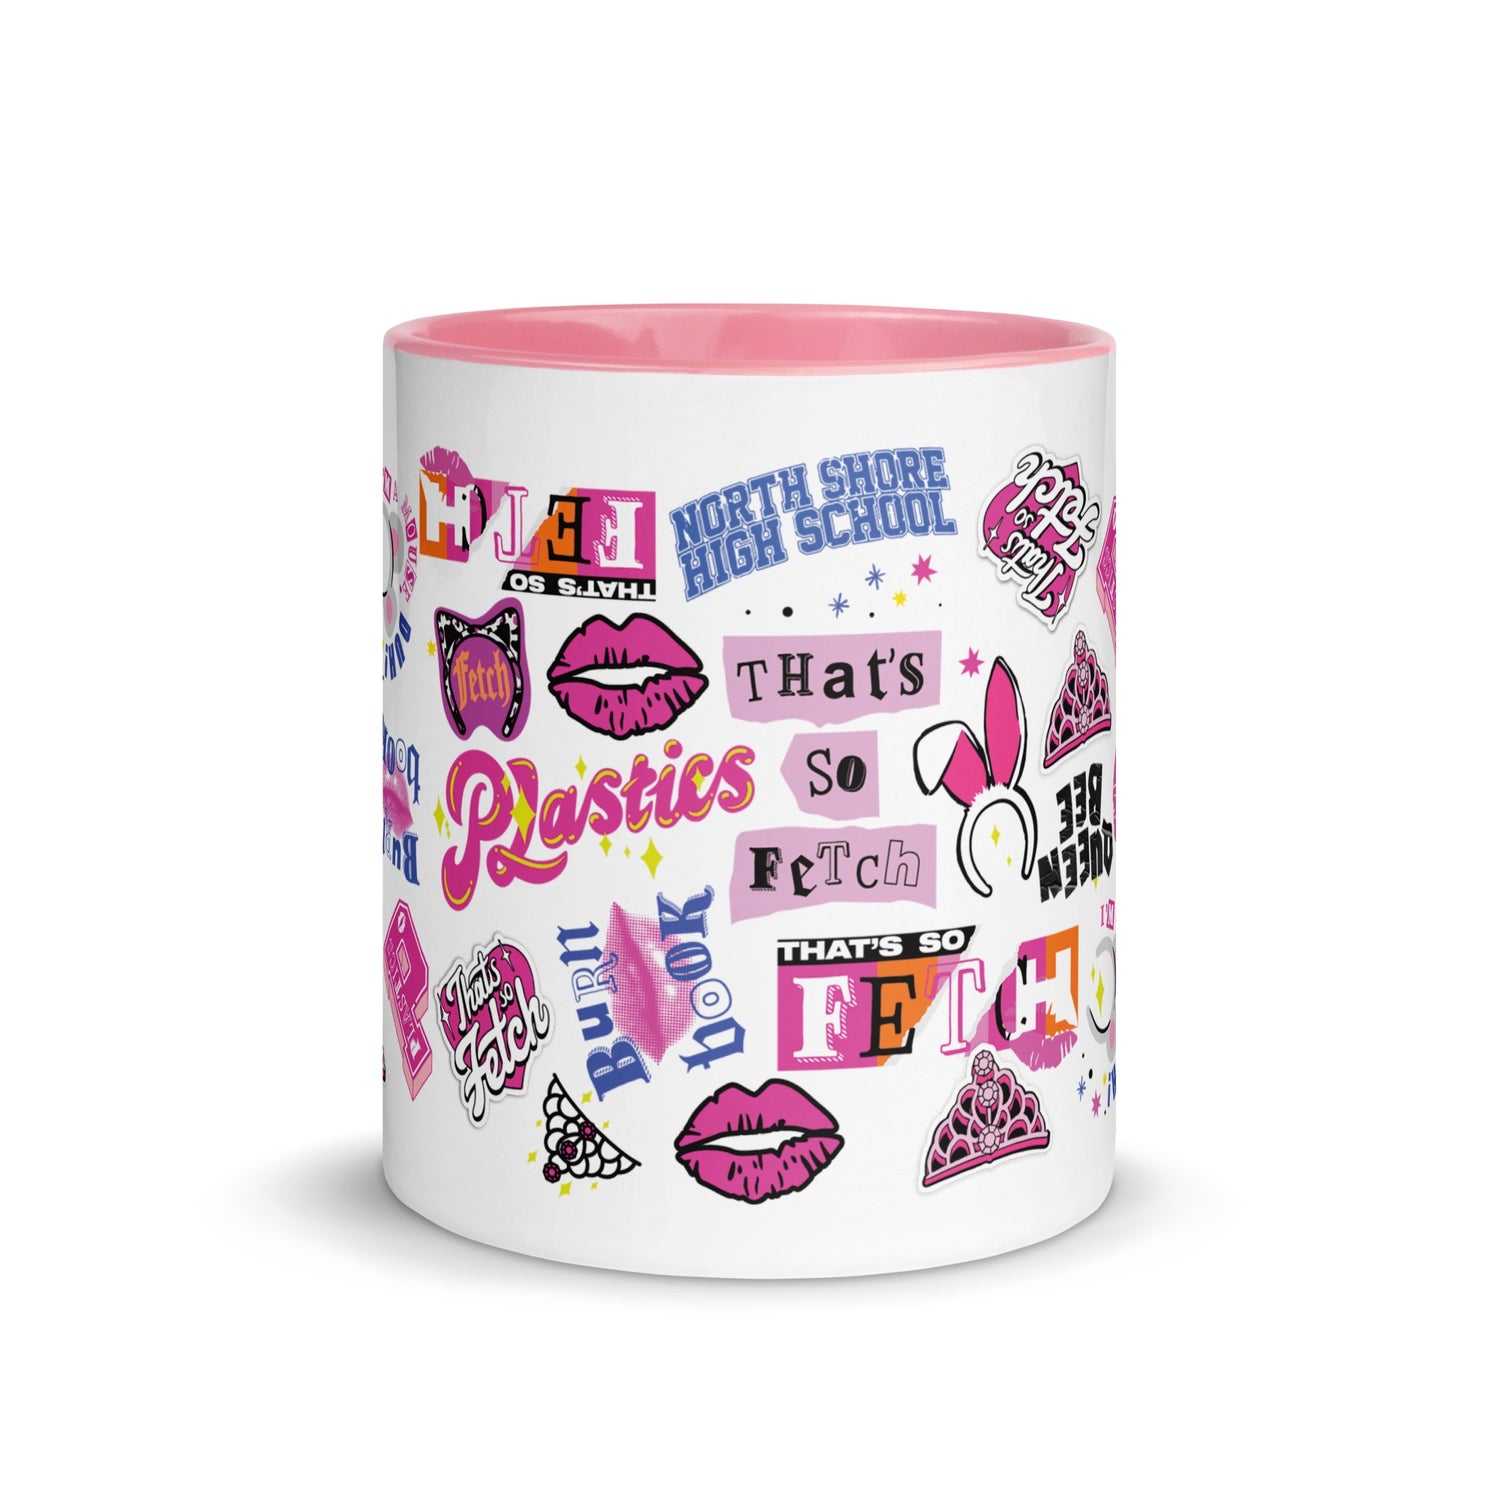 Mean Girls Merry Fetch-mas Tumbler Cup